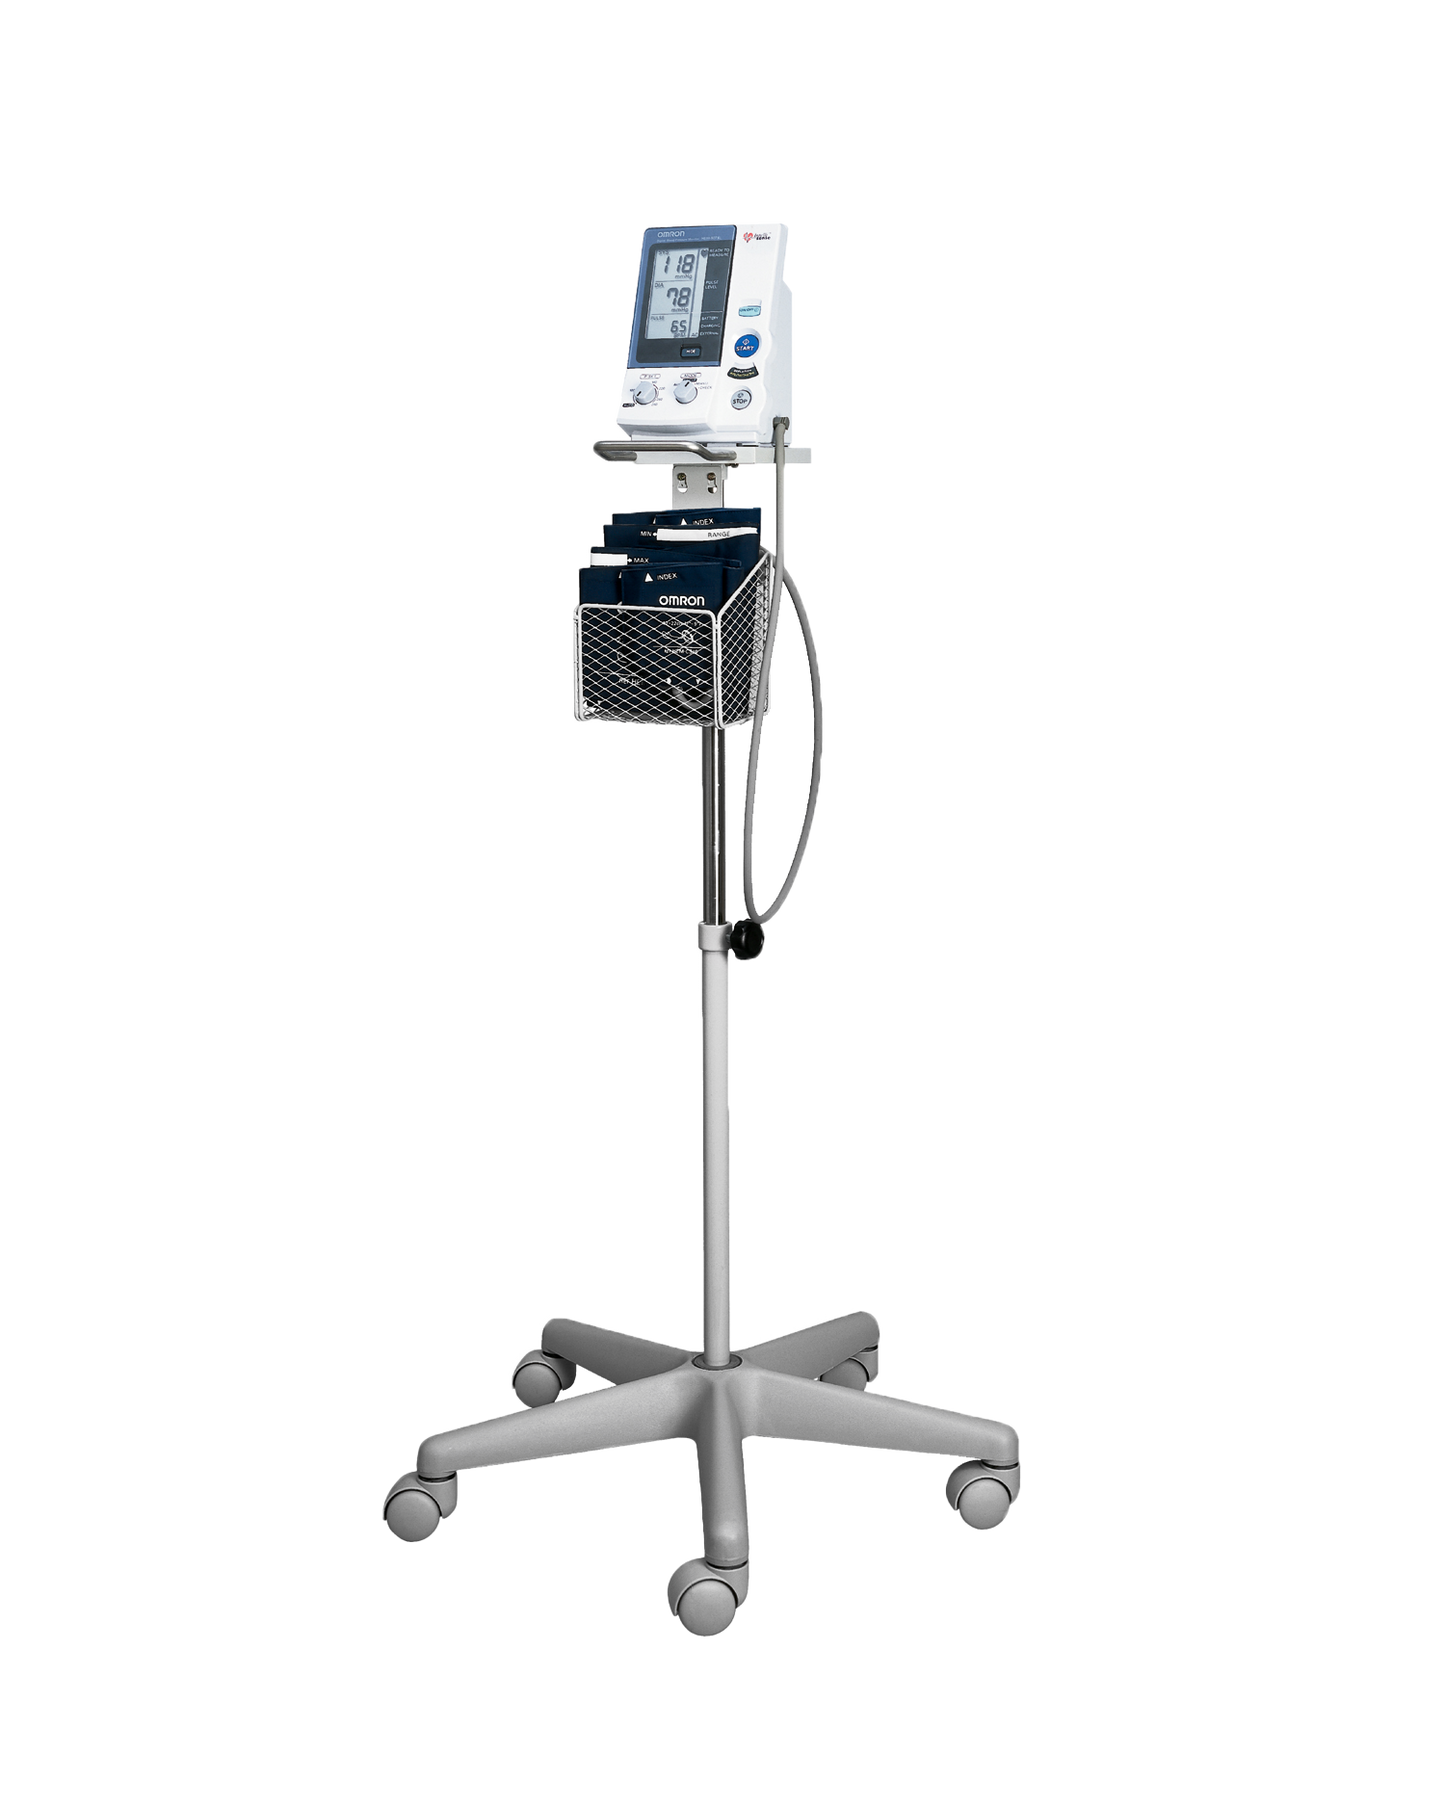 Omron IntelliSense Digital Blood Pressure Monitor